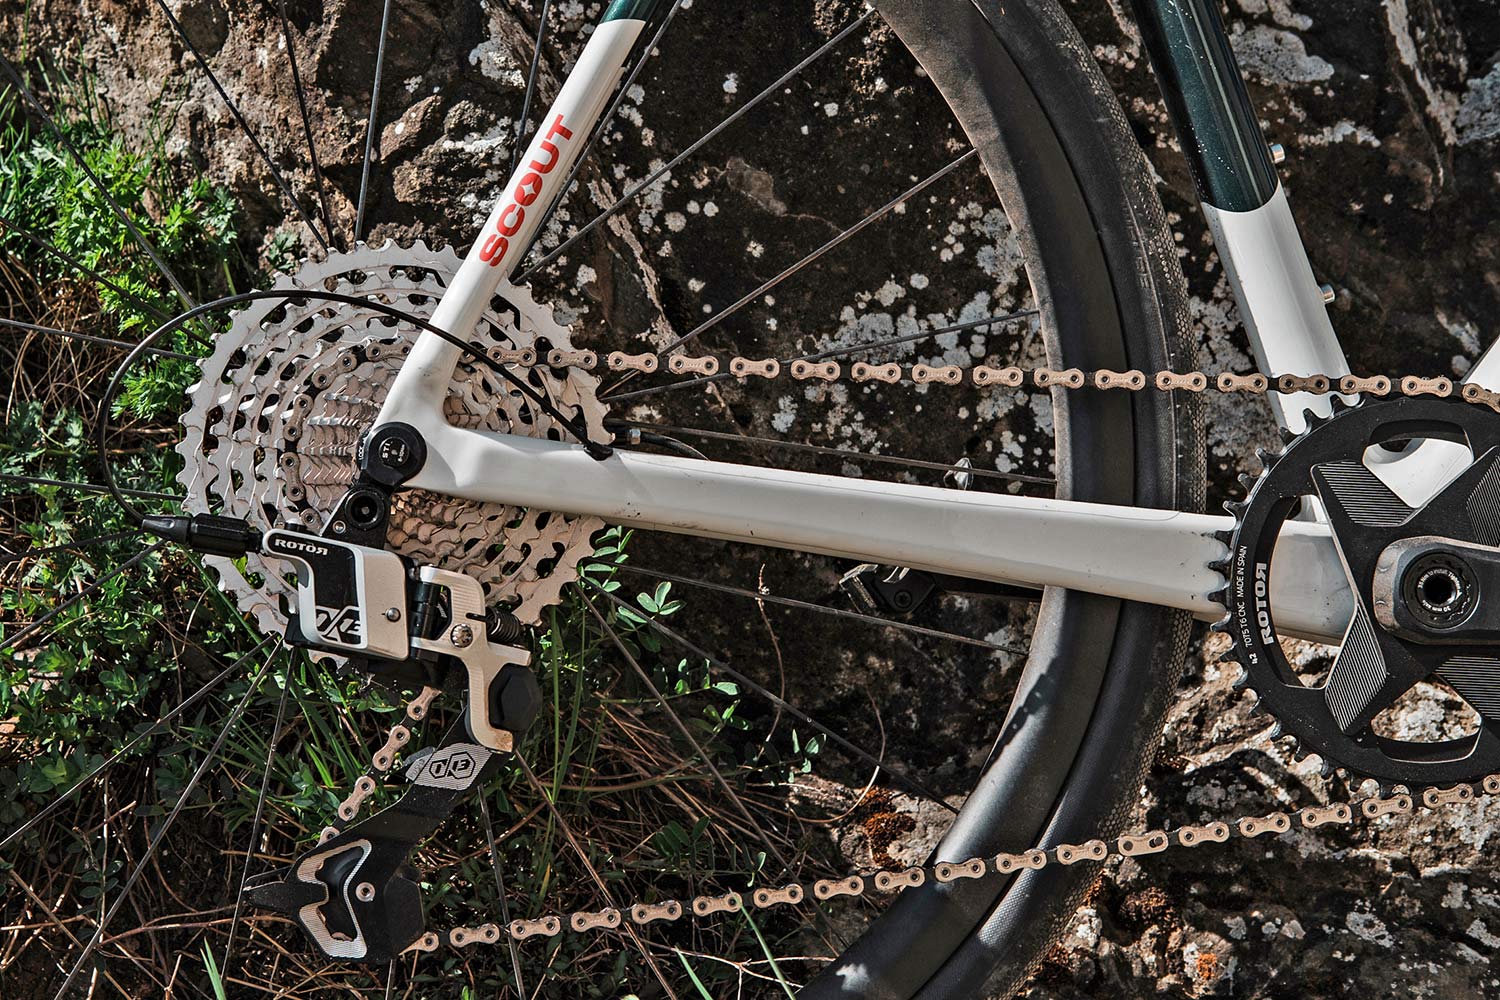 New Festka Scout custom carbon bikepacking adventure gravel bike, new name